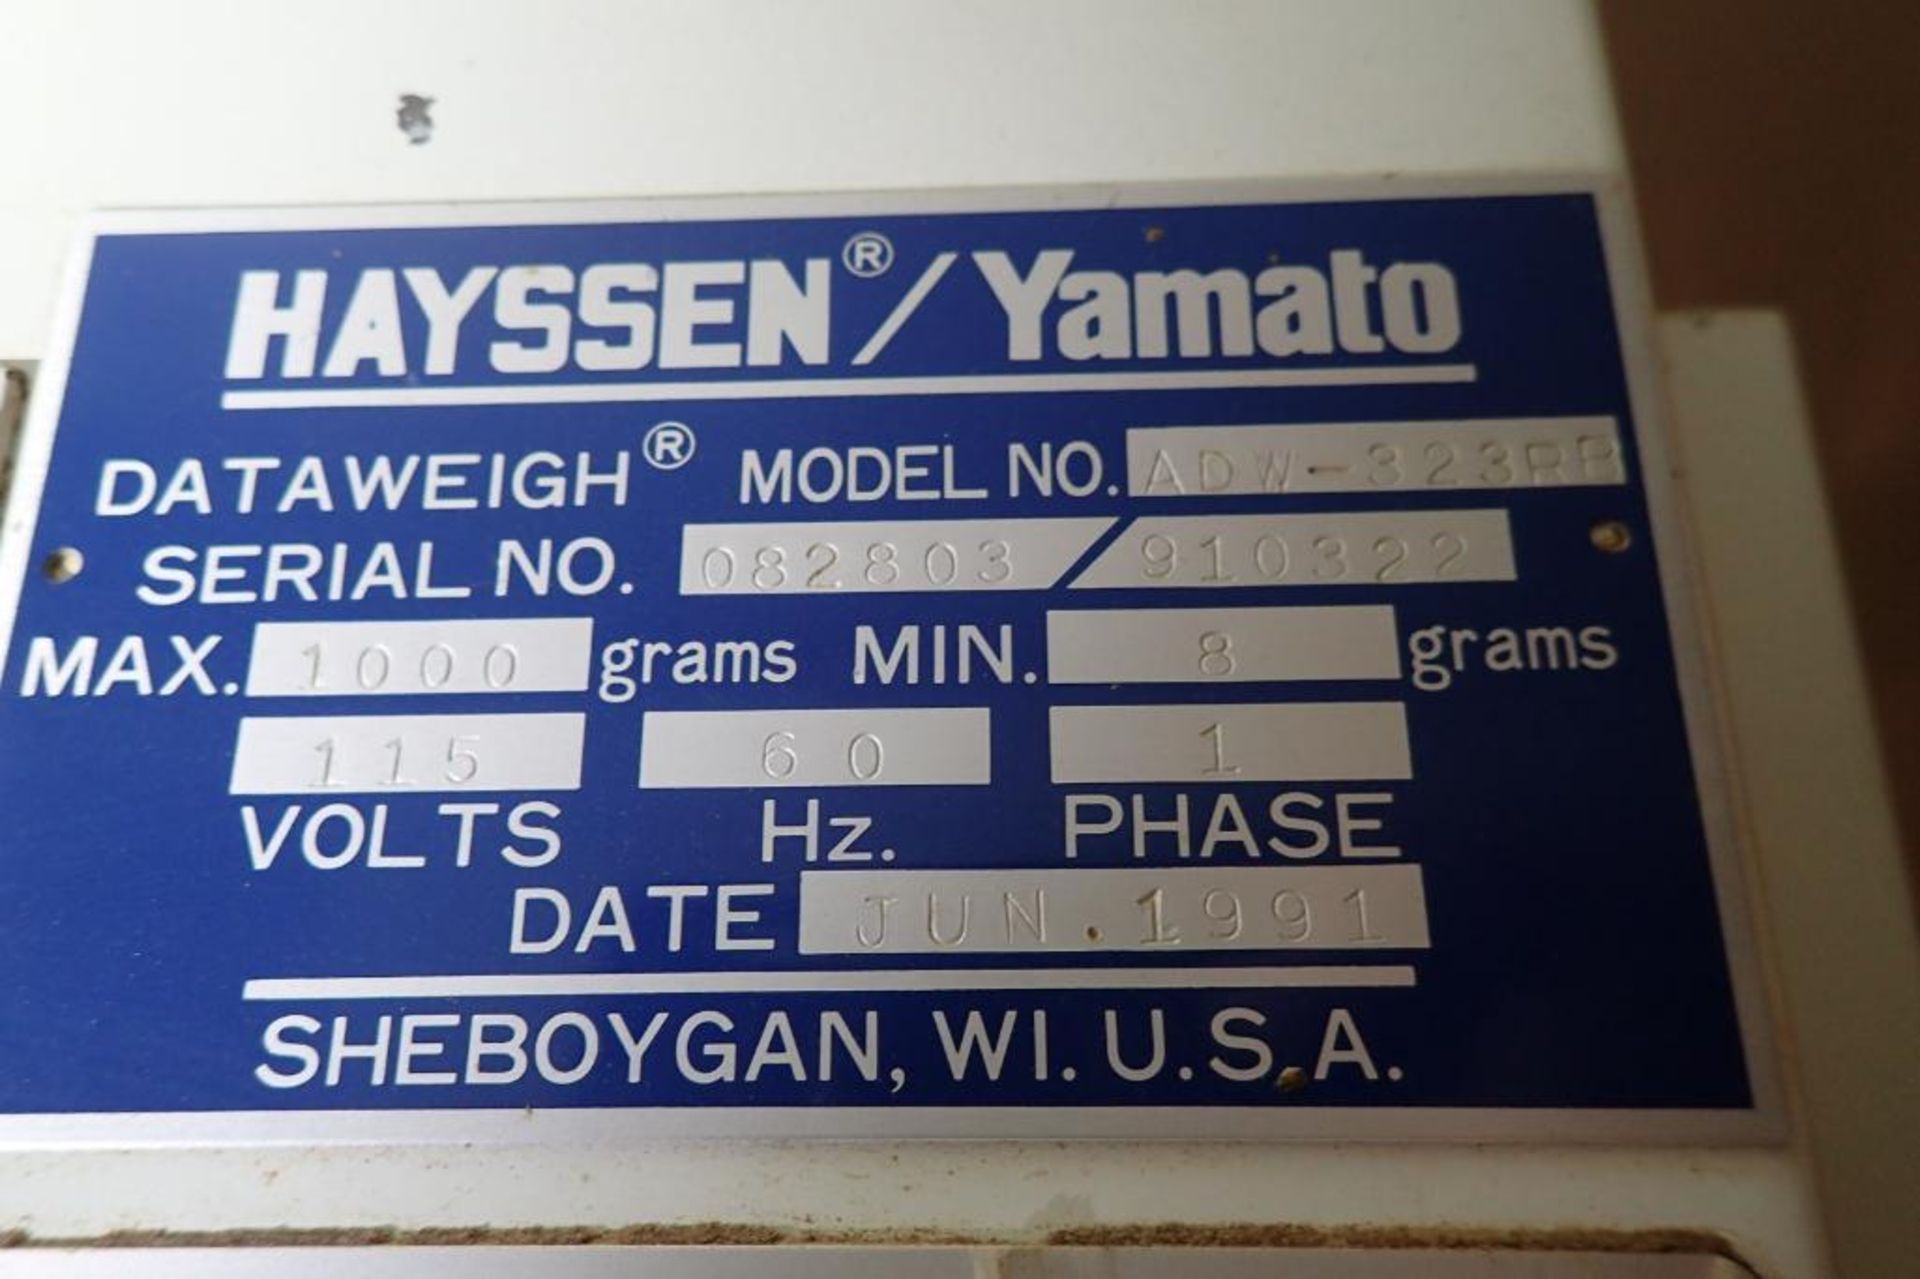 1991 Yamato 14-head scale, Model ADW-323RB, SN: 082803/910322, 8 - 1000 gram capacity. **Rigging Fee - Image 11 of 11